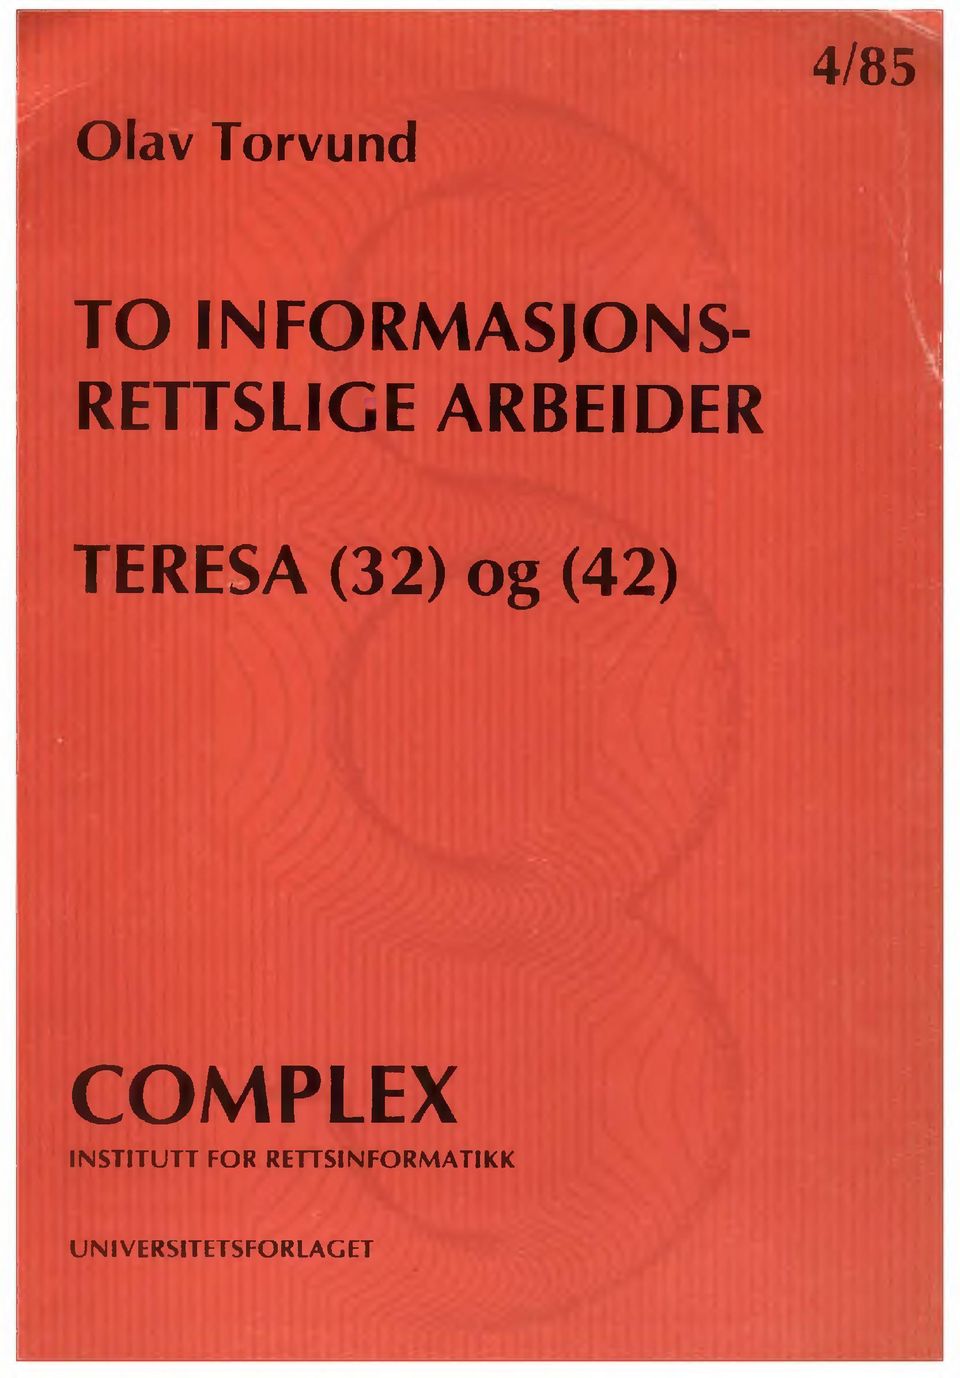 TERESA (32) og (42) COMPLEX